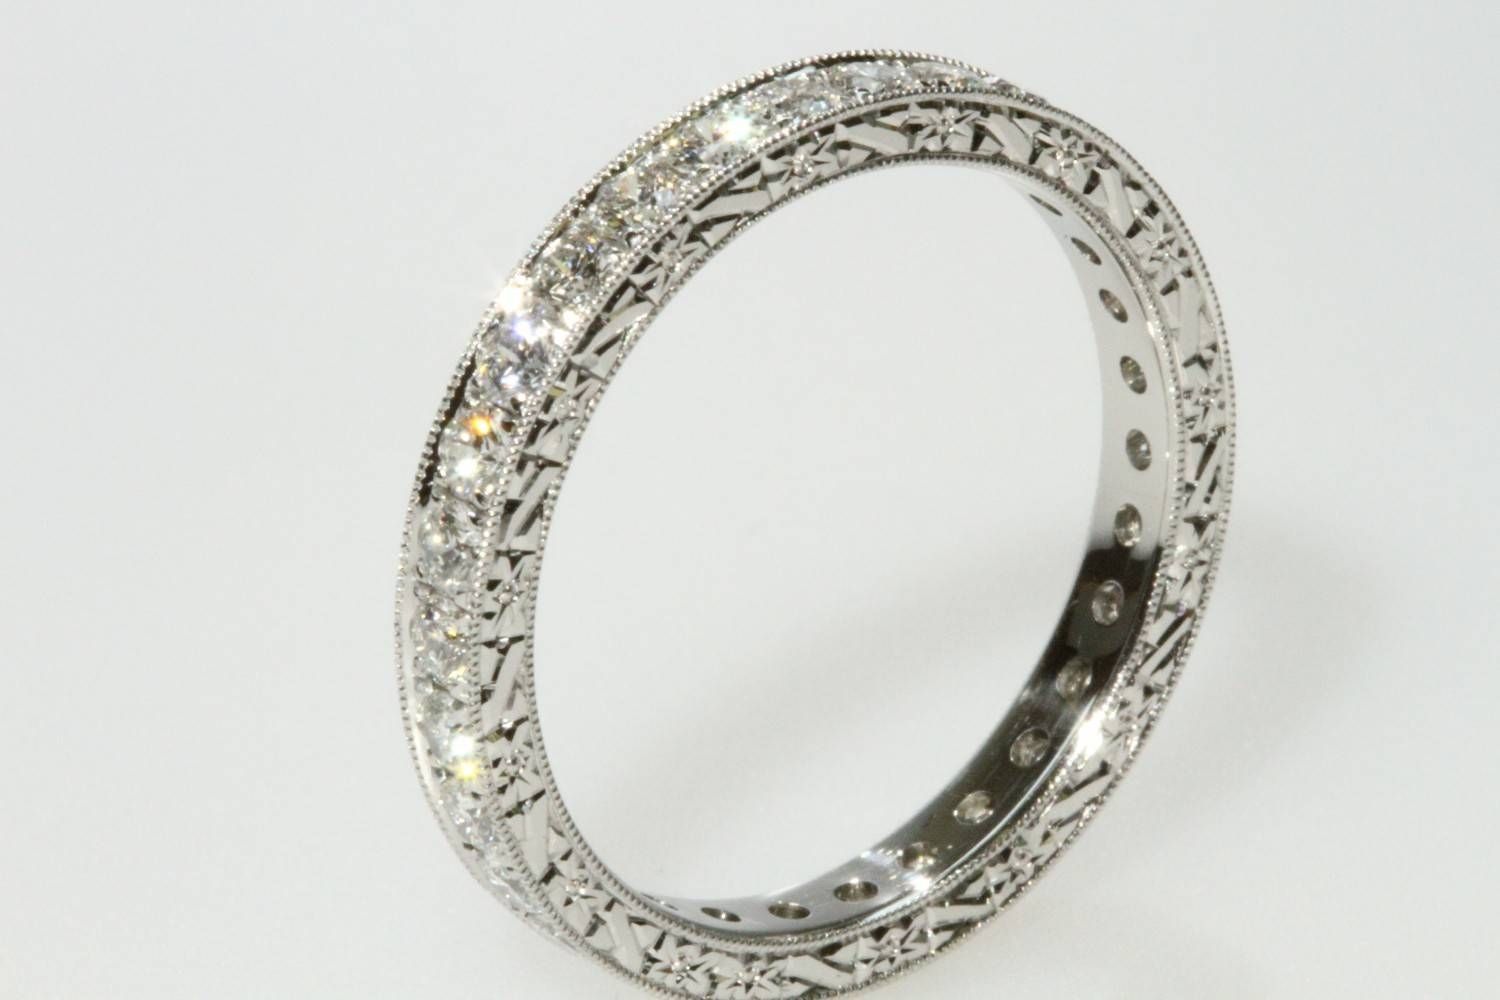 Antique Wedding Bands Design: Men And Women | Wedding Ideas For Antique Wedding Rings For Women (View 13 of 15)